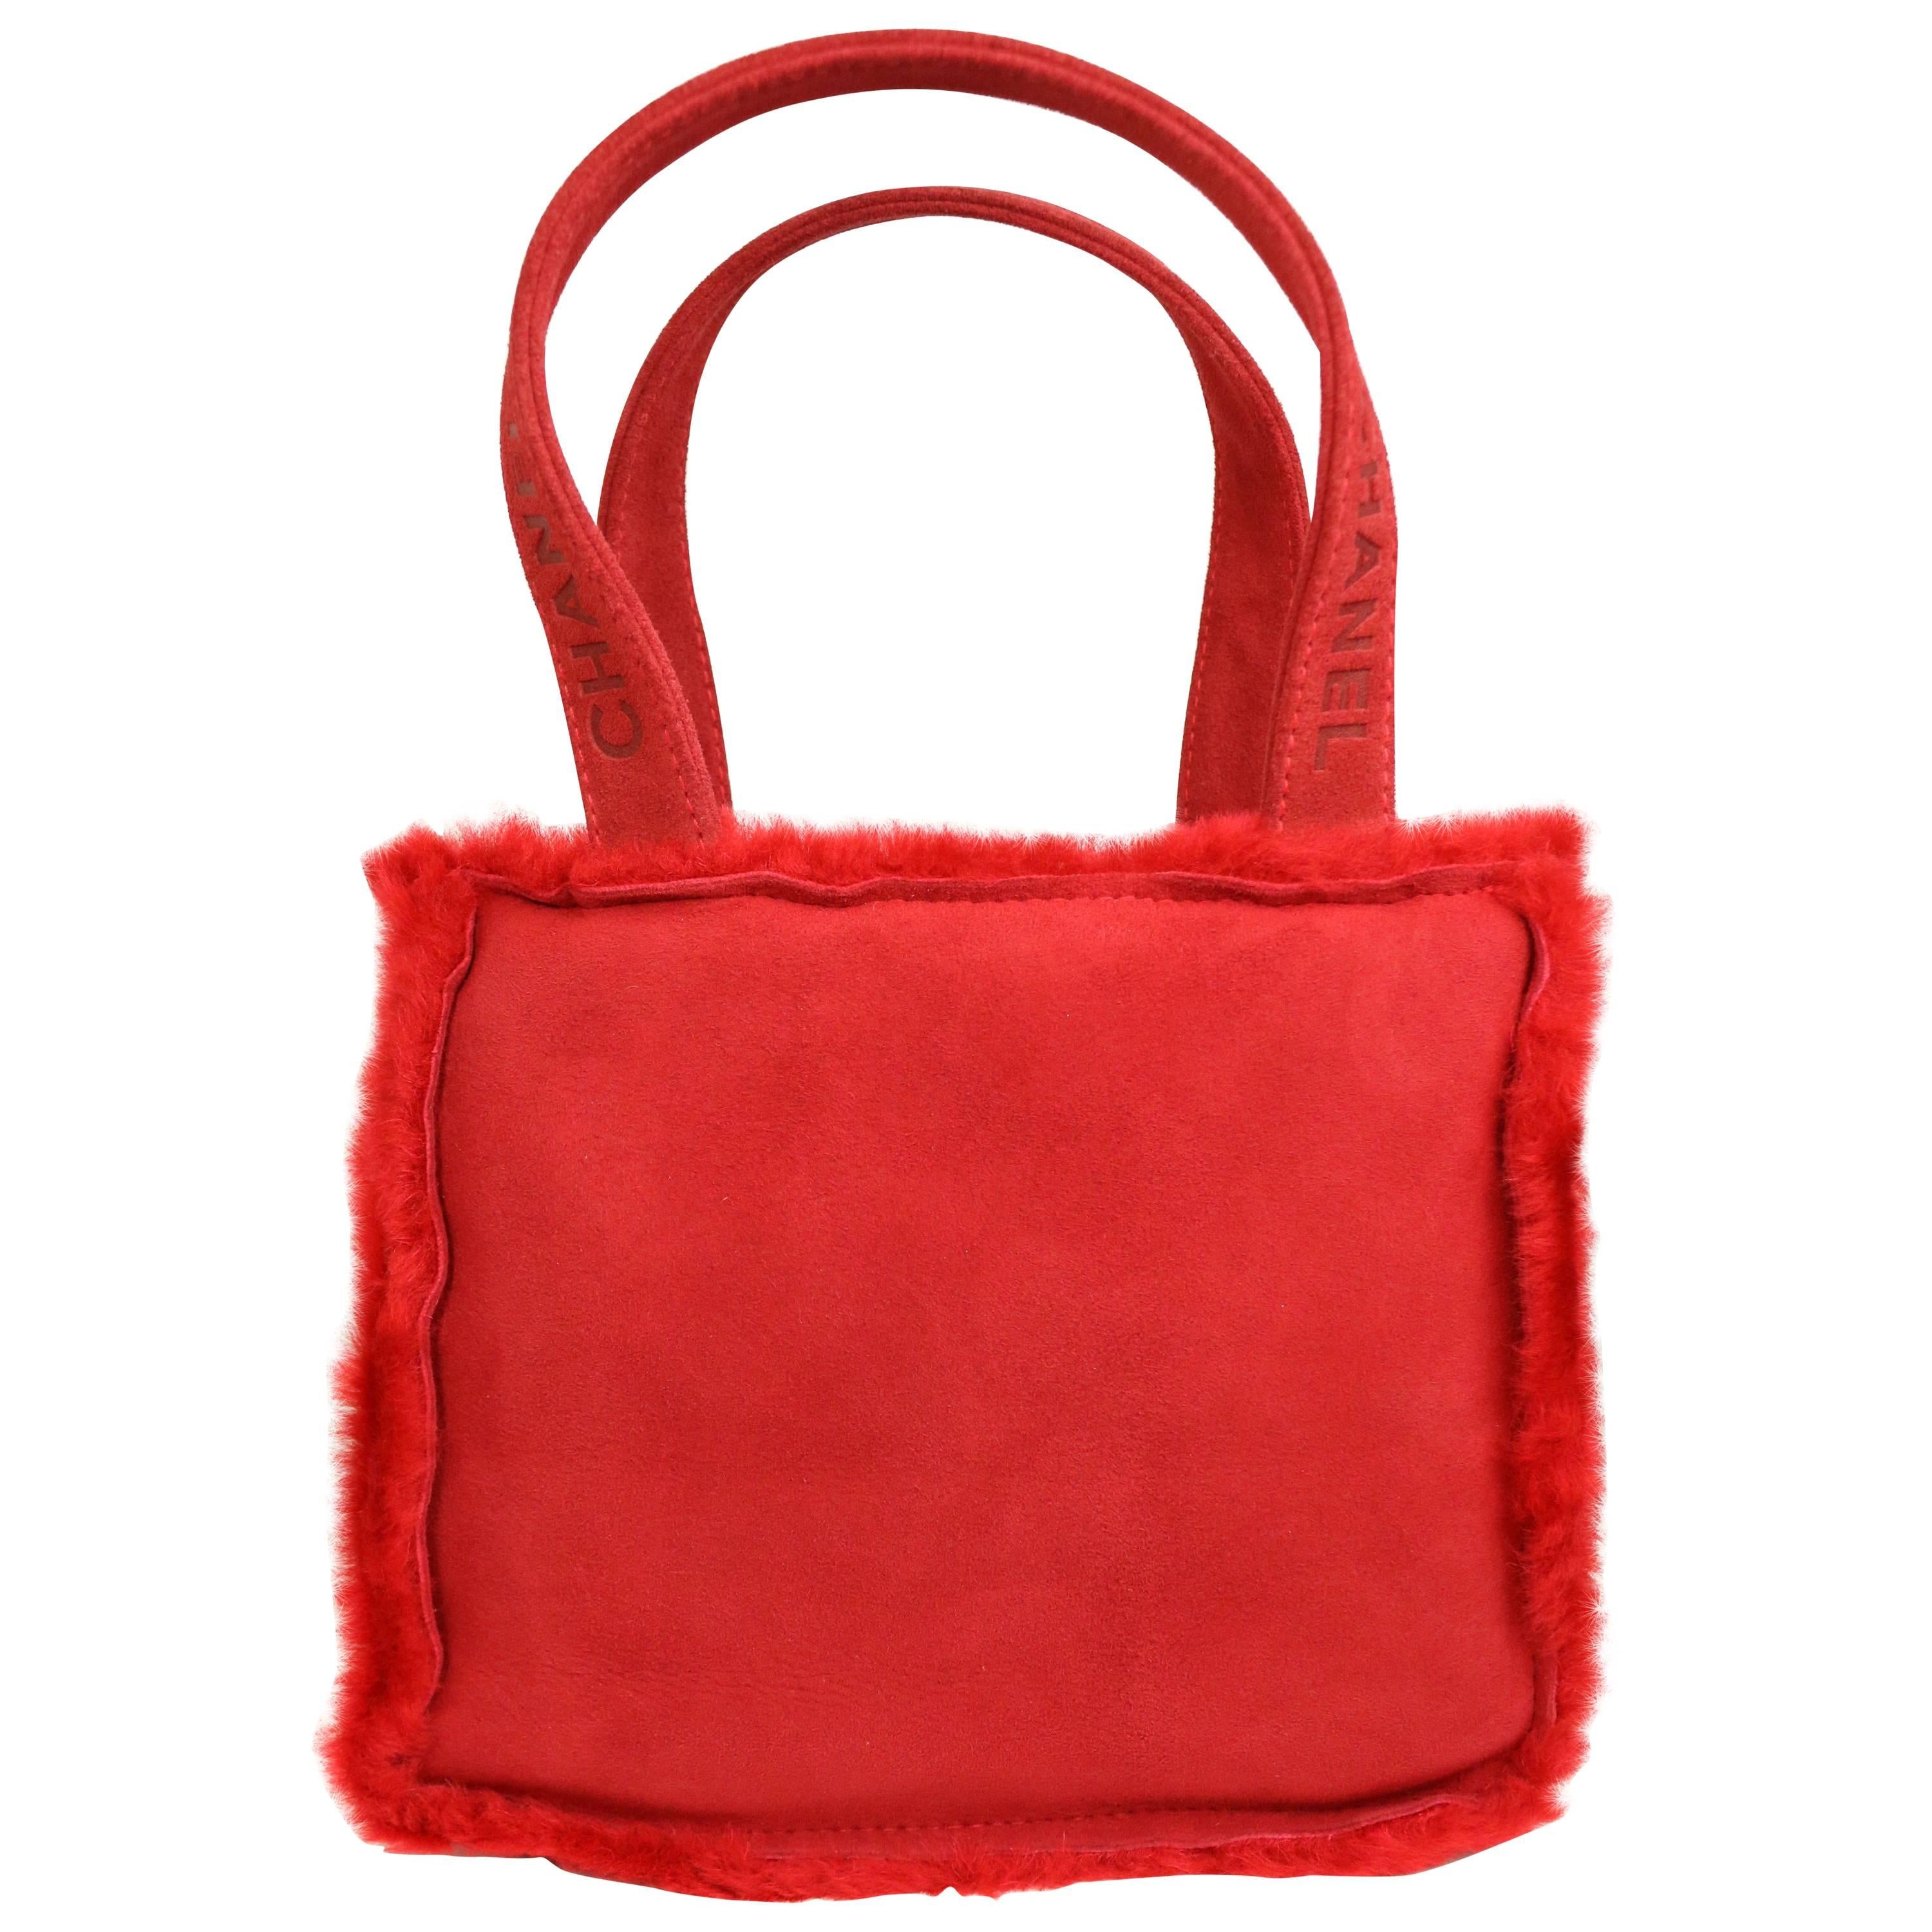 Vintage 90s Chanel Red Suede with Fur Trim Handbag